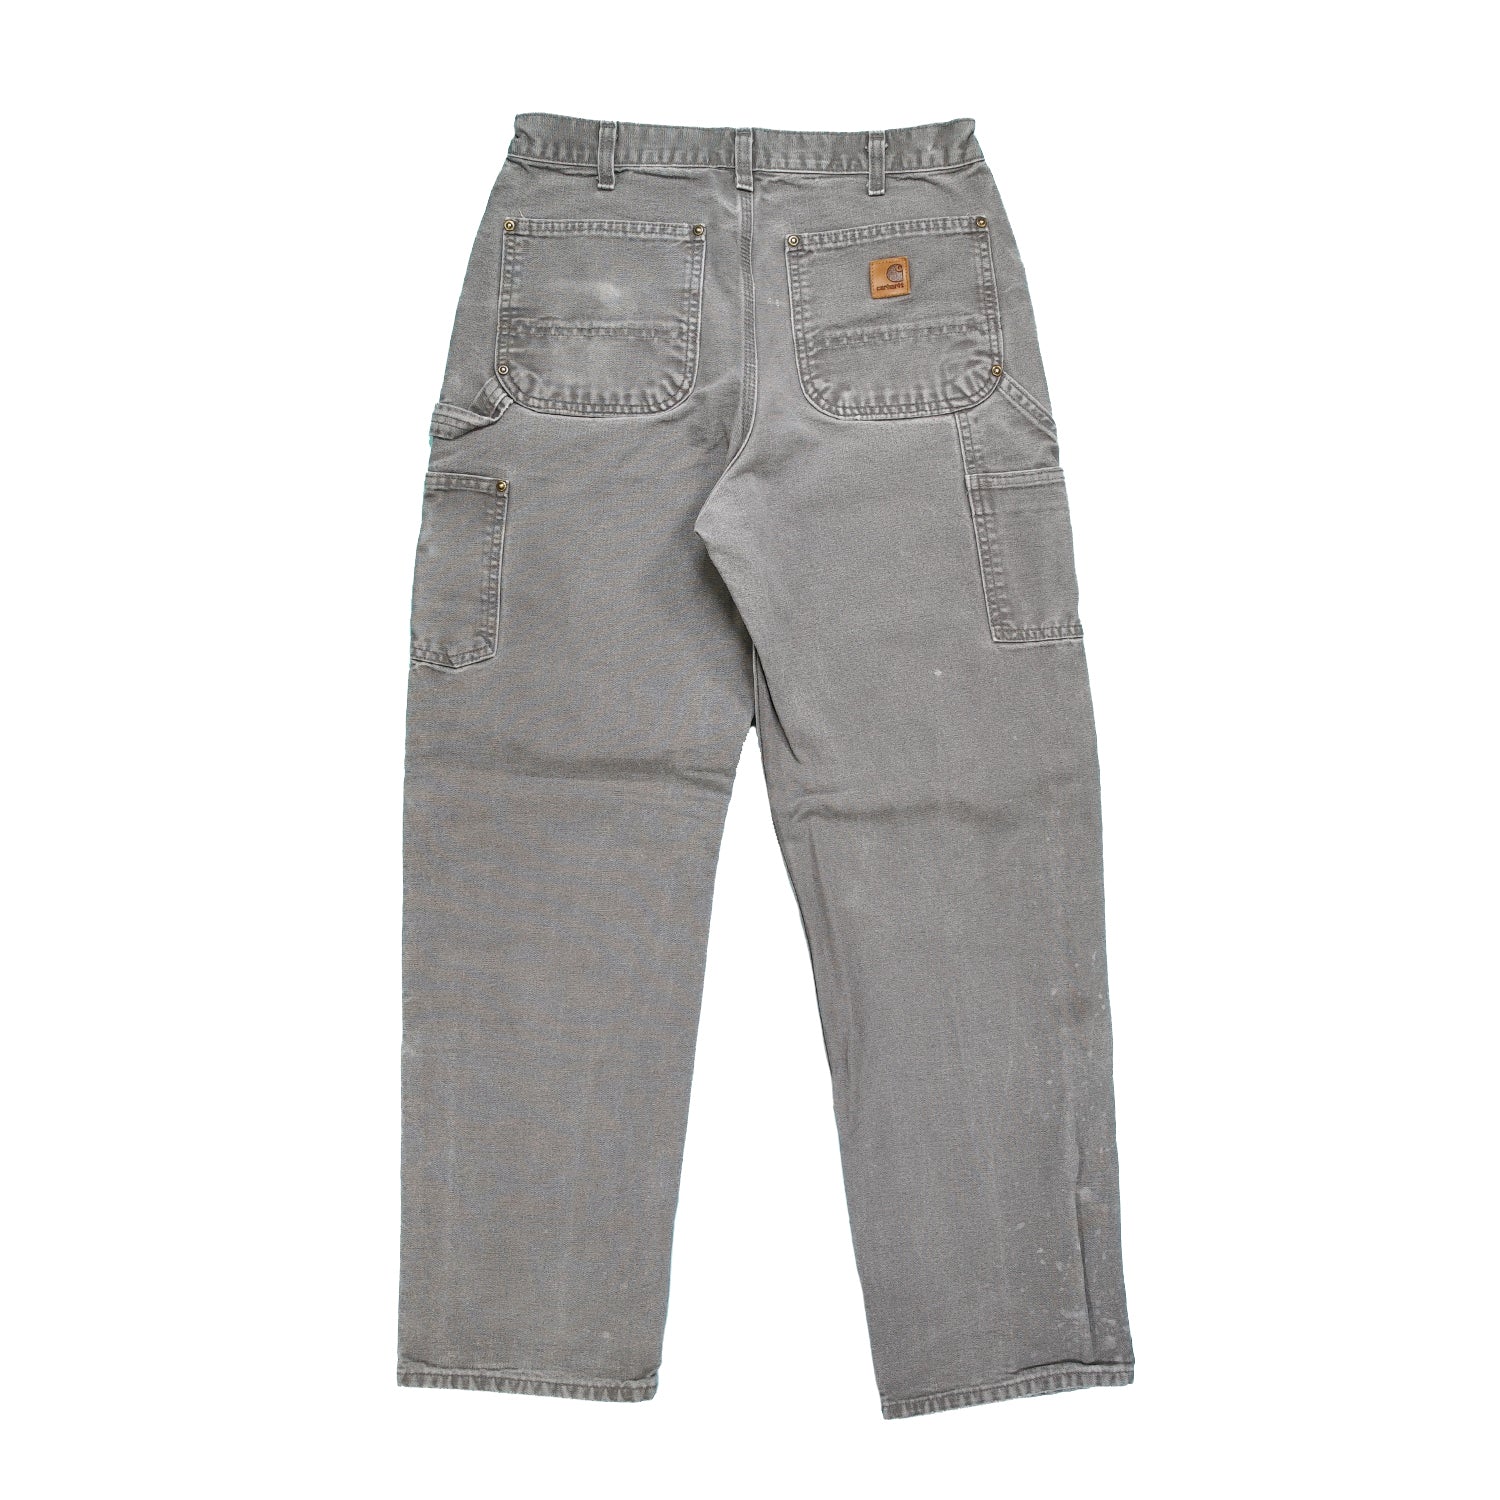 Carhartt double knee jeans grey 29